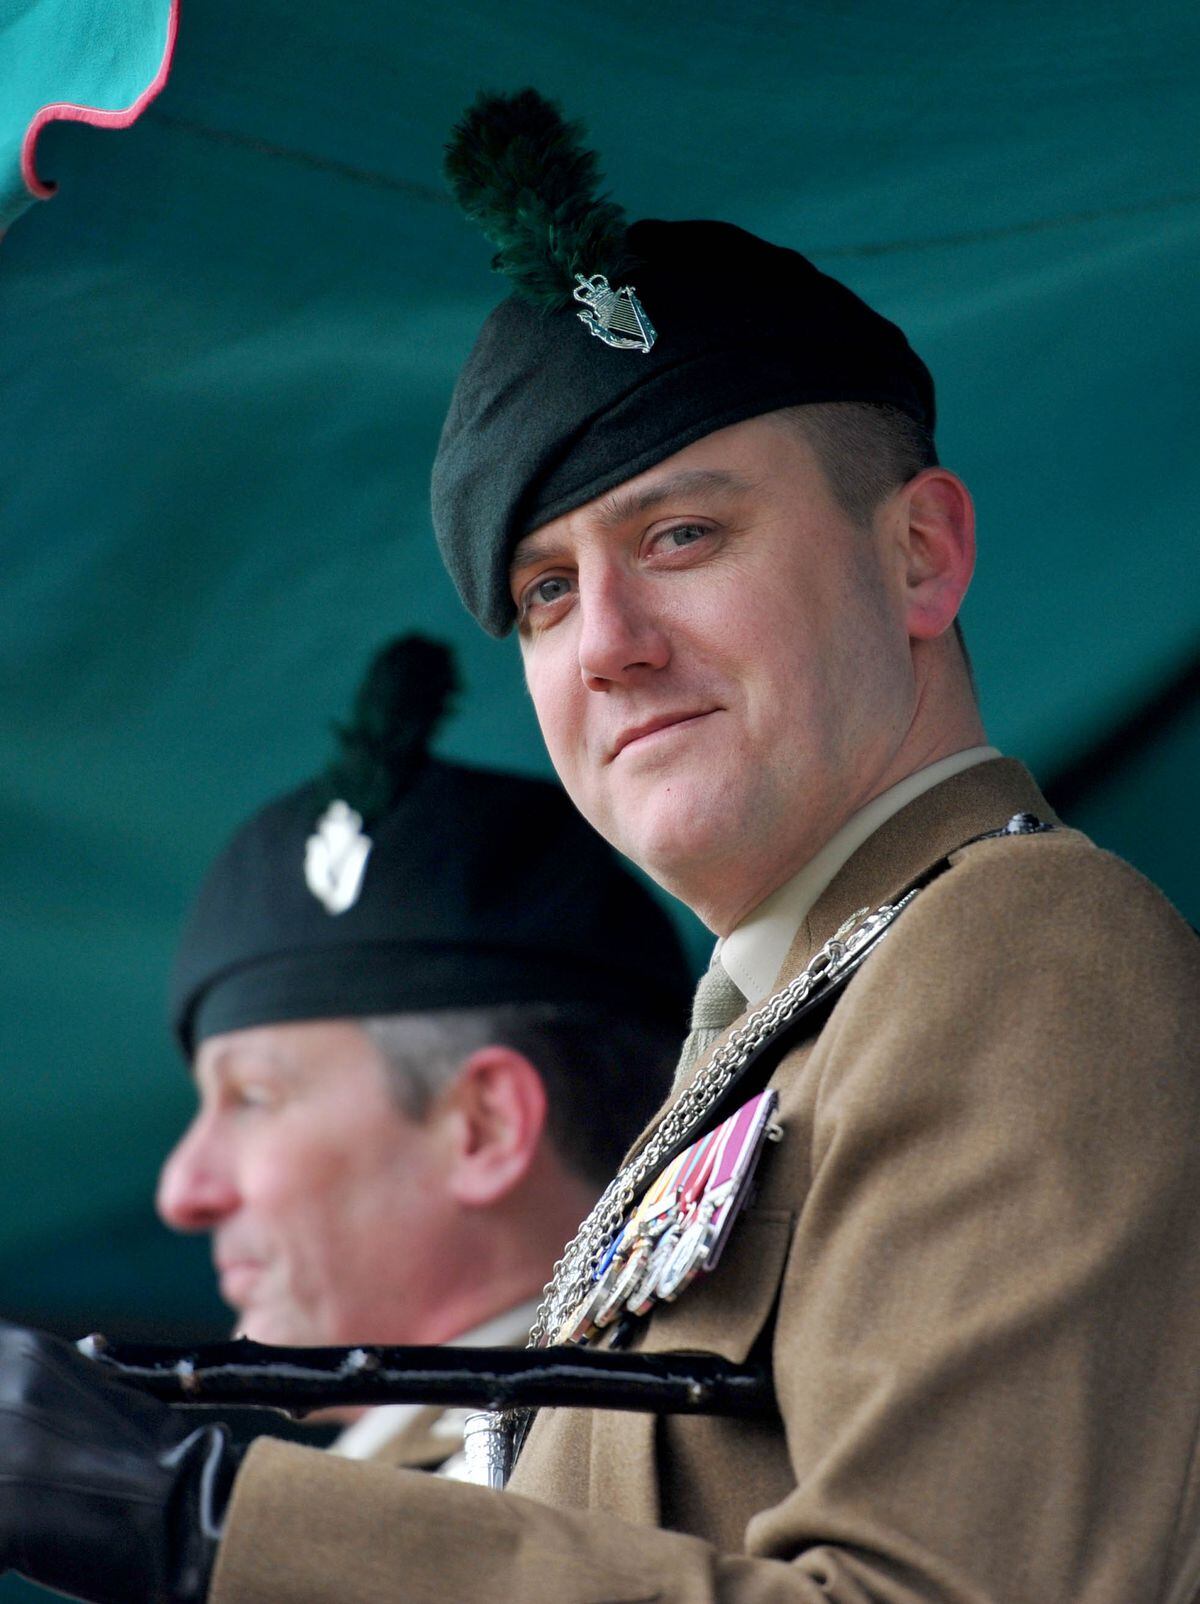 Irish Battalion Parade At Clive Barracks To Celebrate St Patricks Day